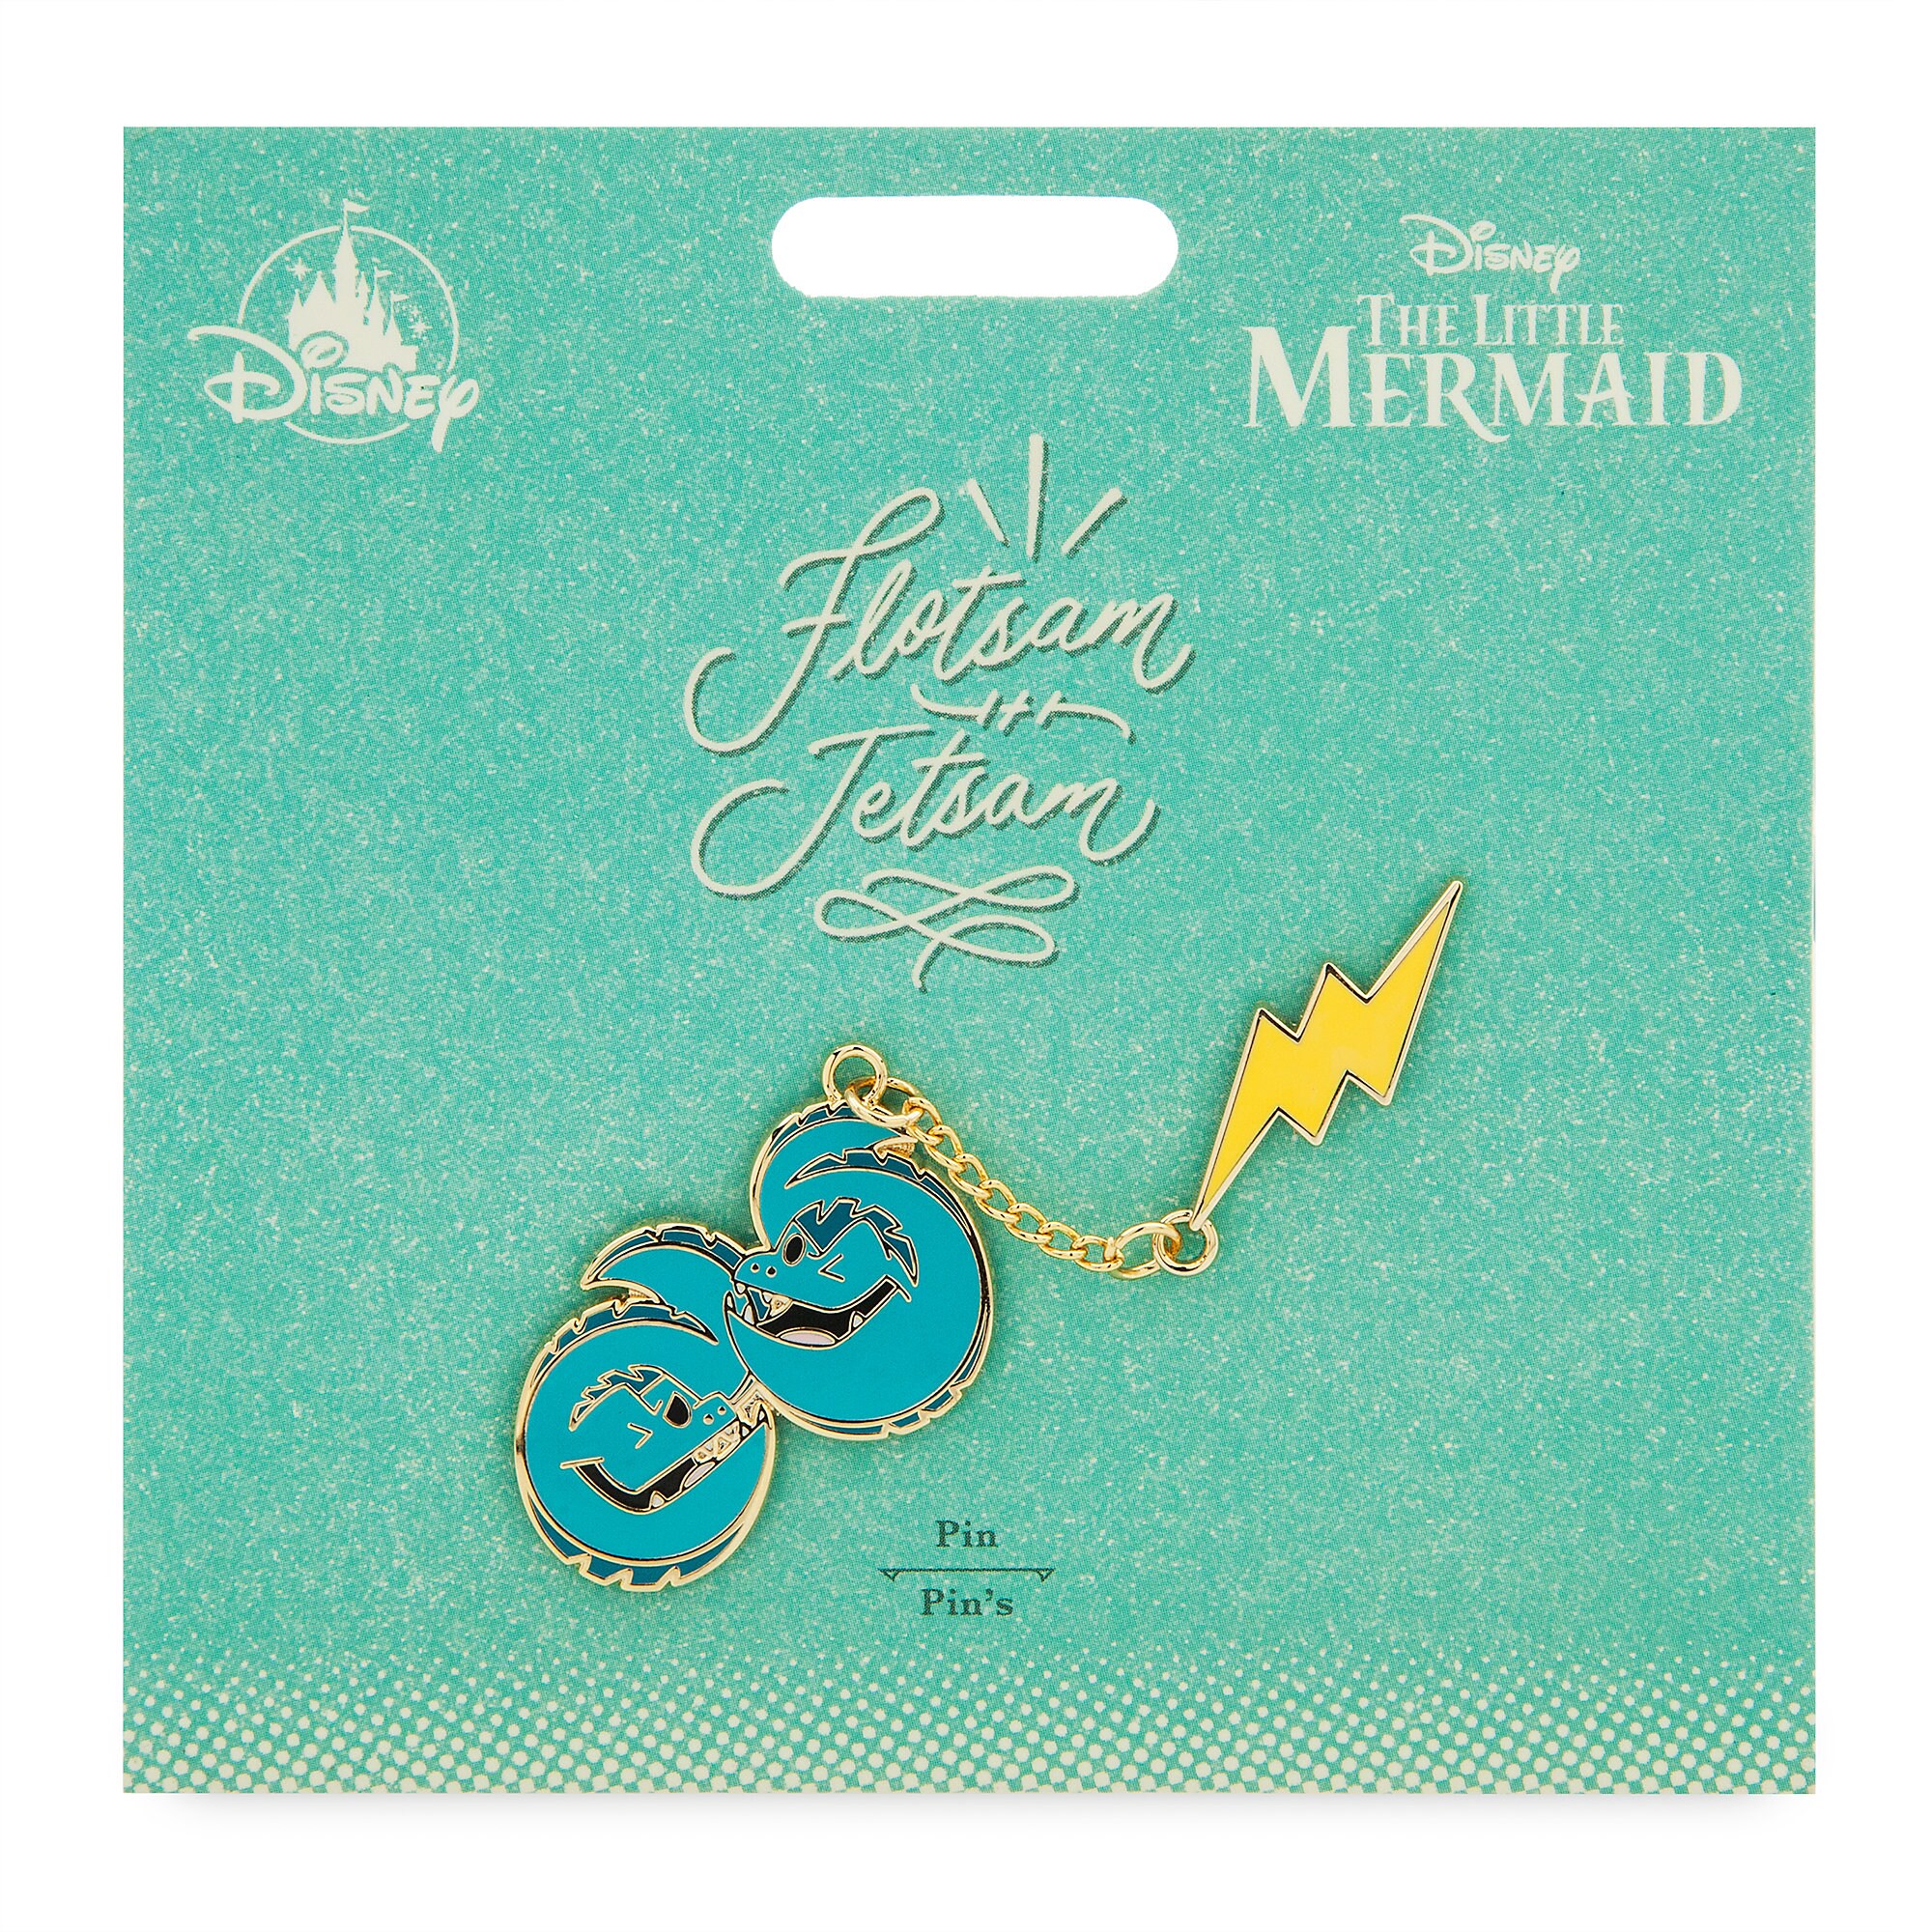 Flotsam and Jetsam Pin Set - The Little Mermaid